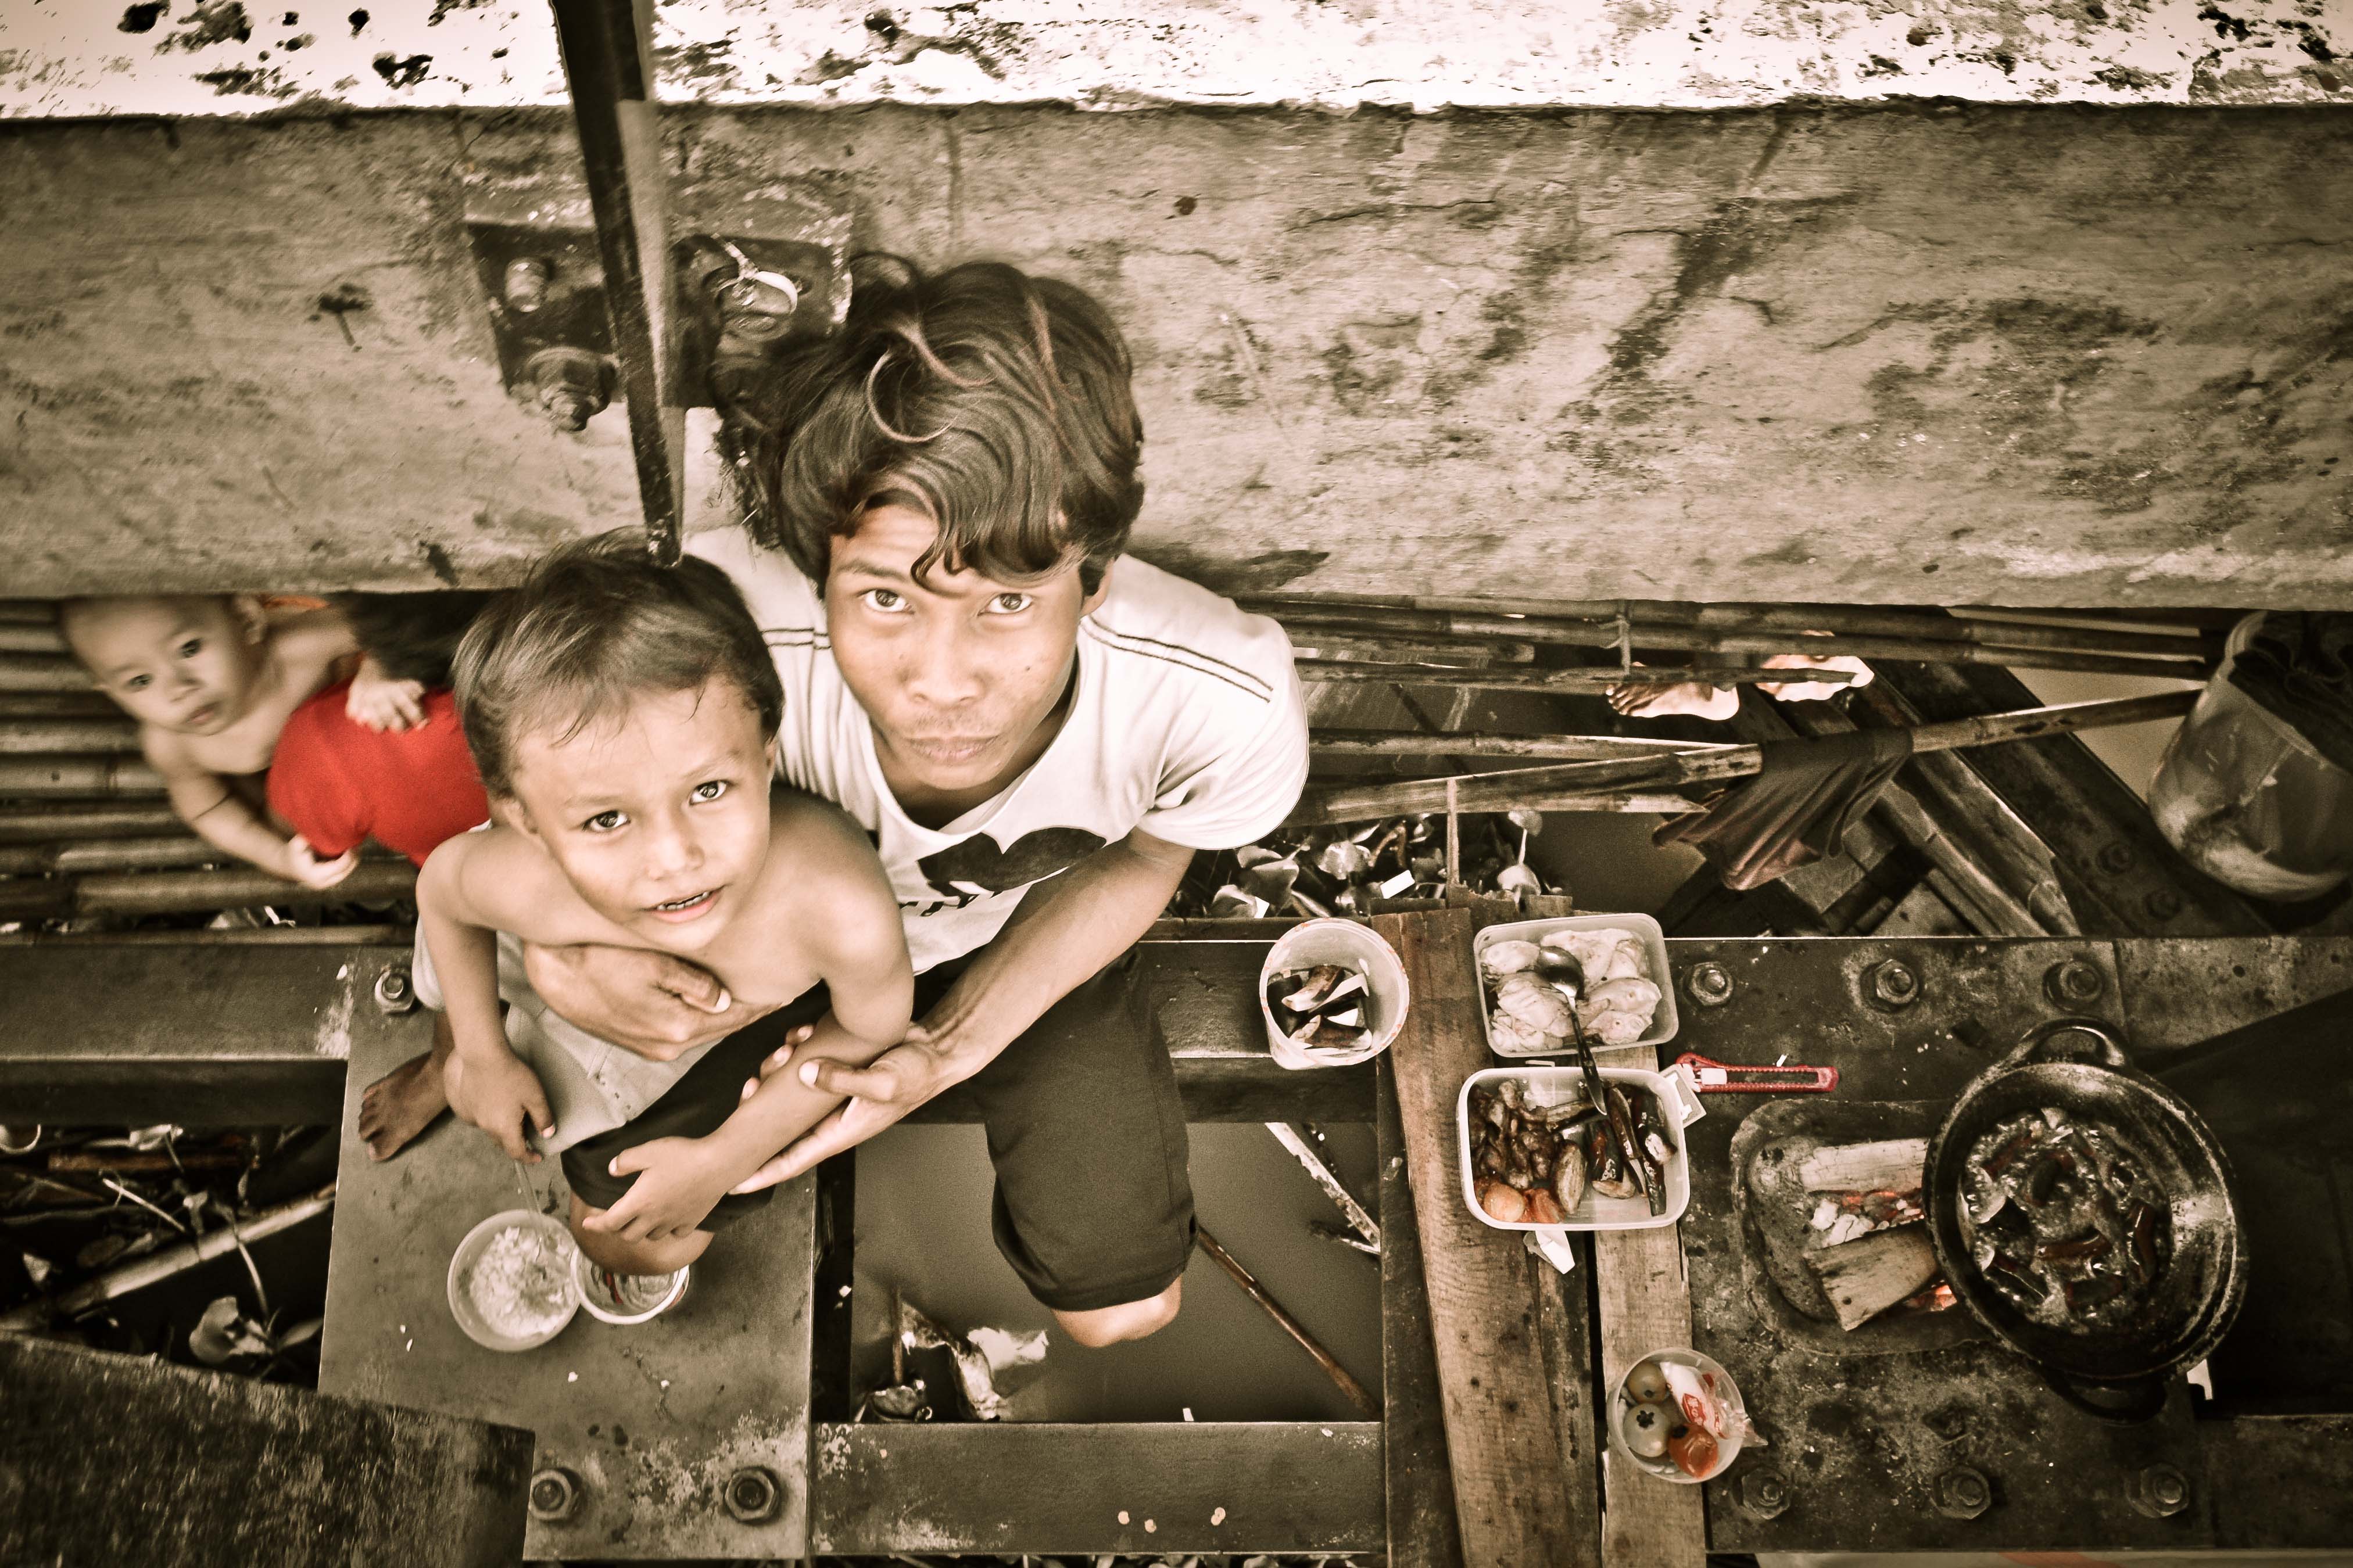 indonesian family living in poverty in borneo